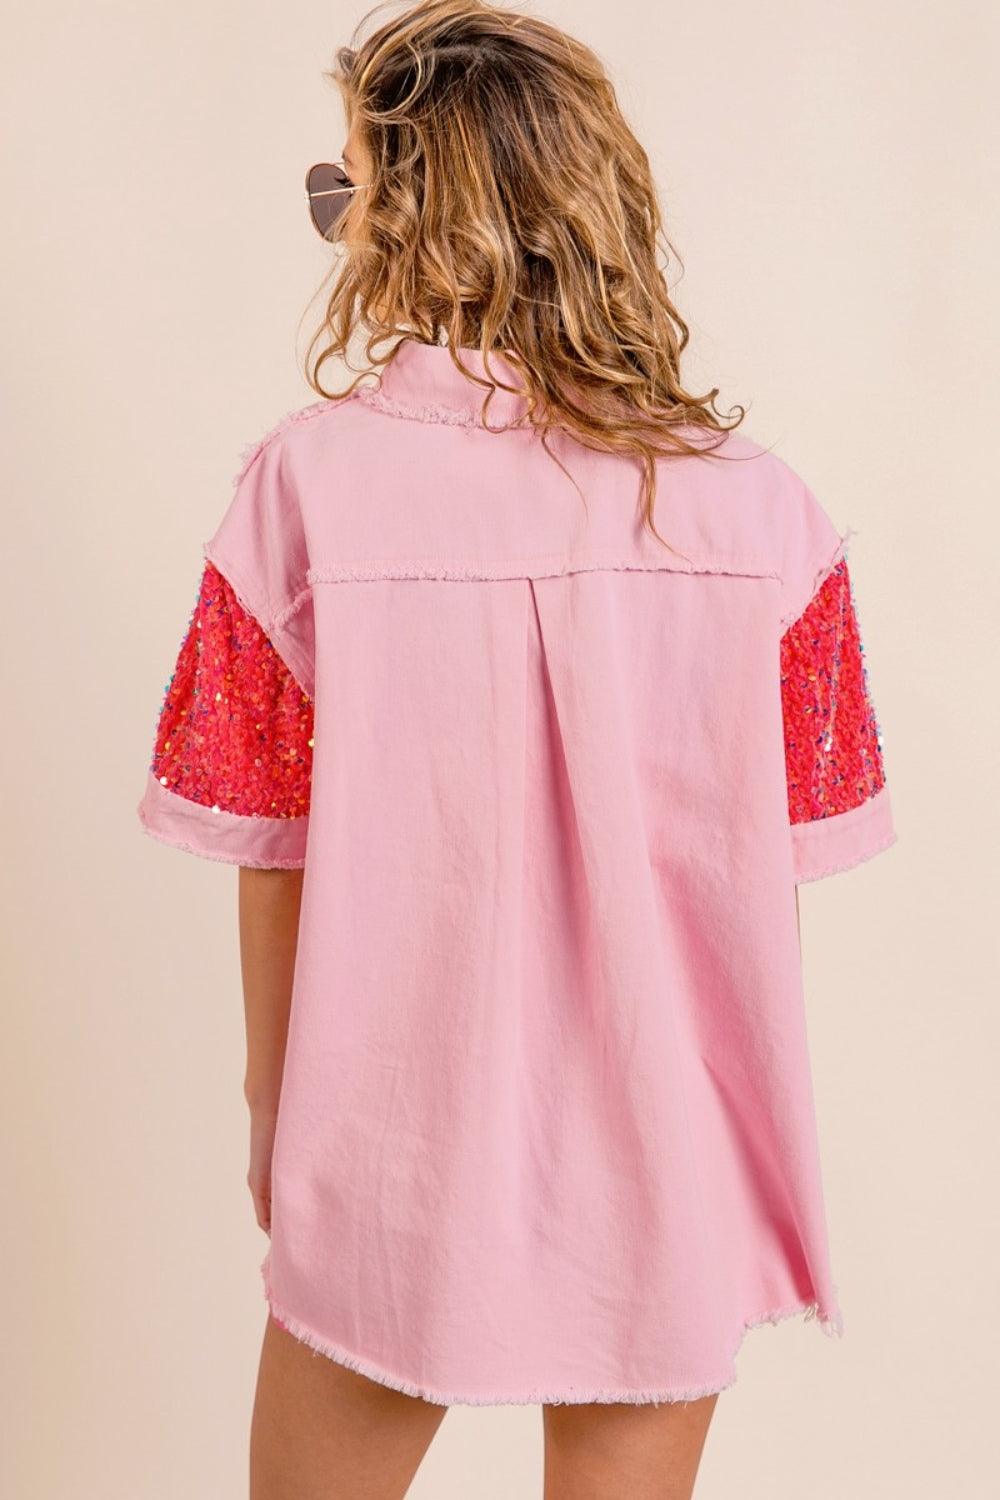 BiBi Sequin Detail Raw Hem Short Sleeve Shirt - AMIClubwear